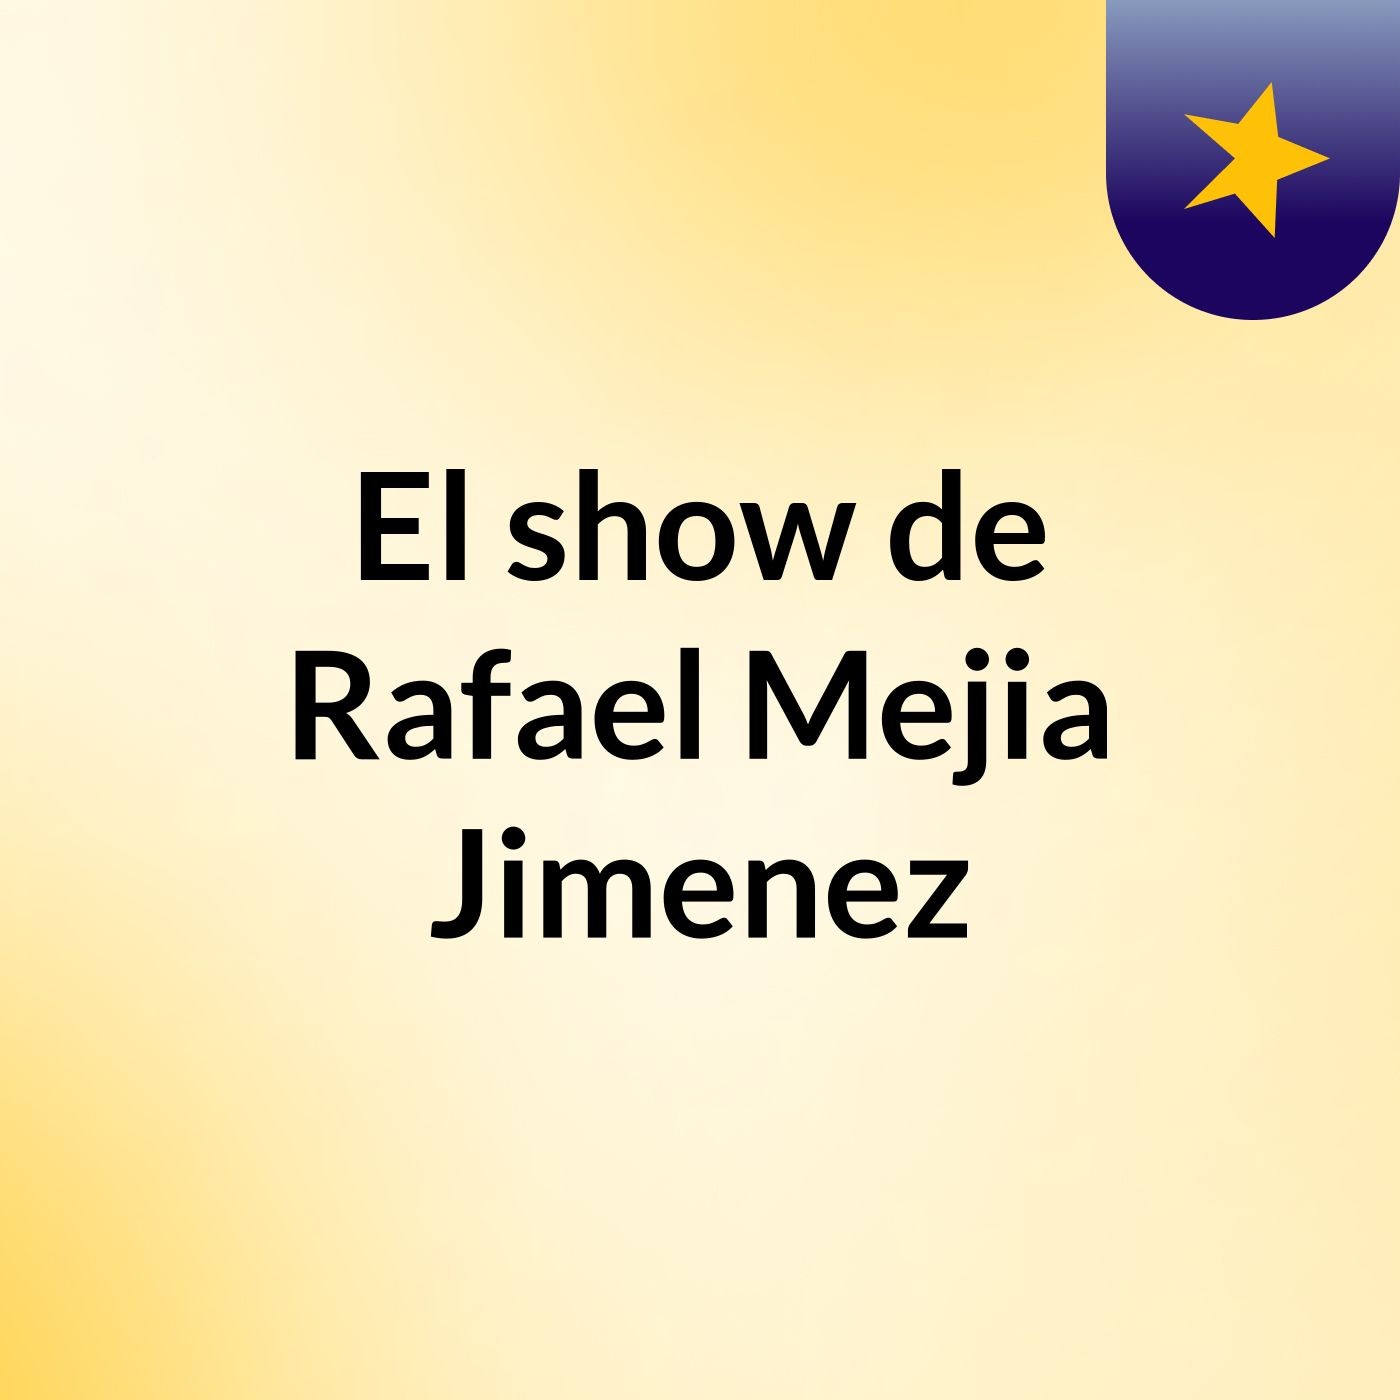 El show de Rafael Mejia Jimenez